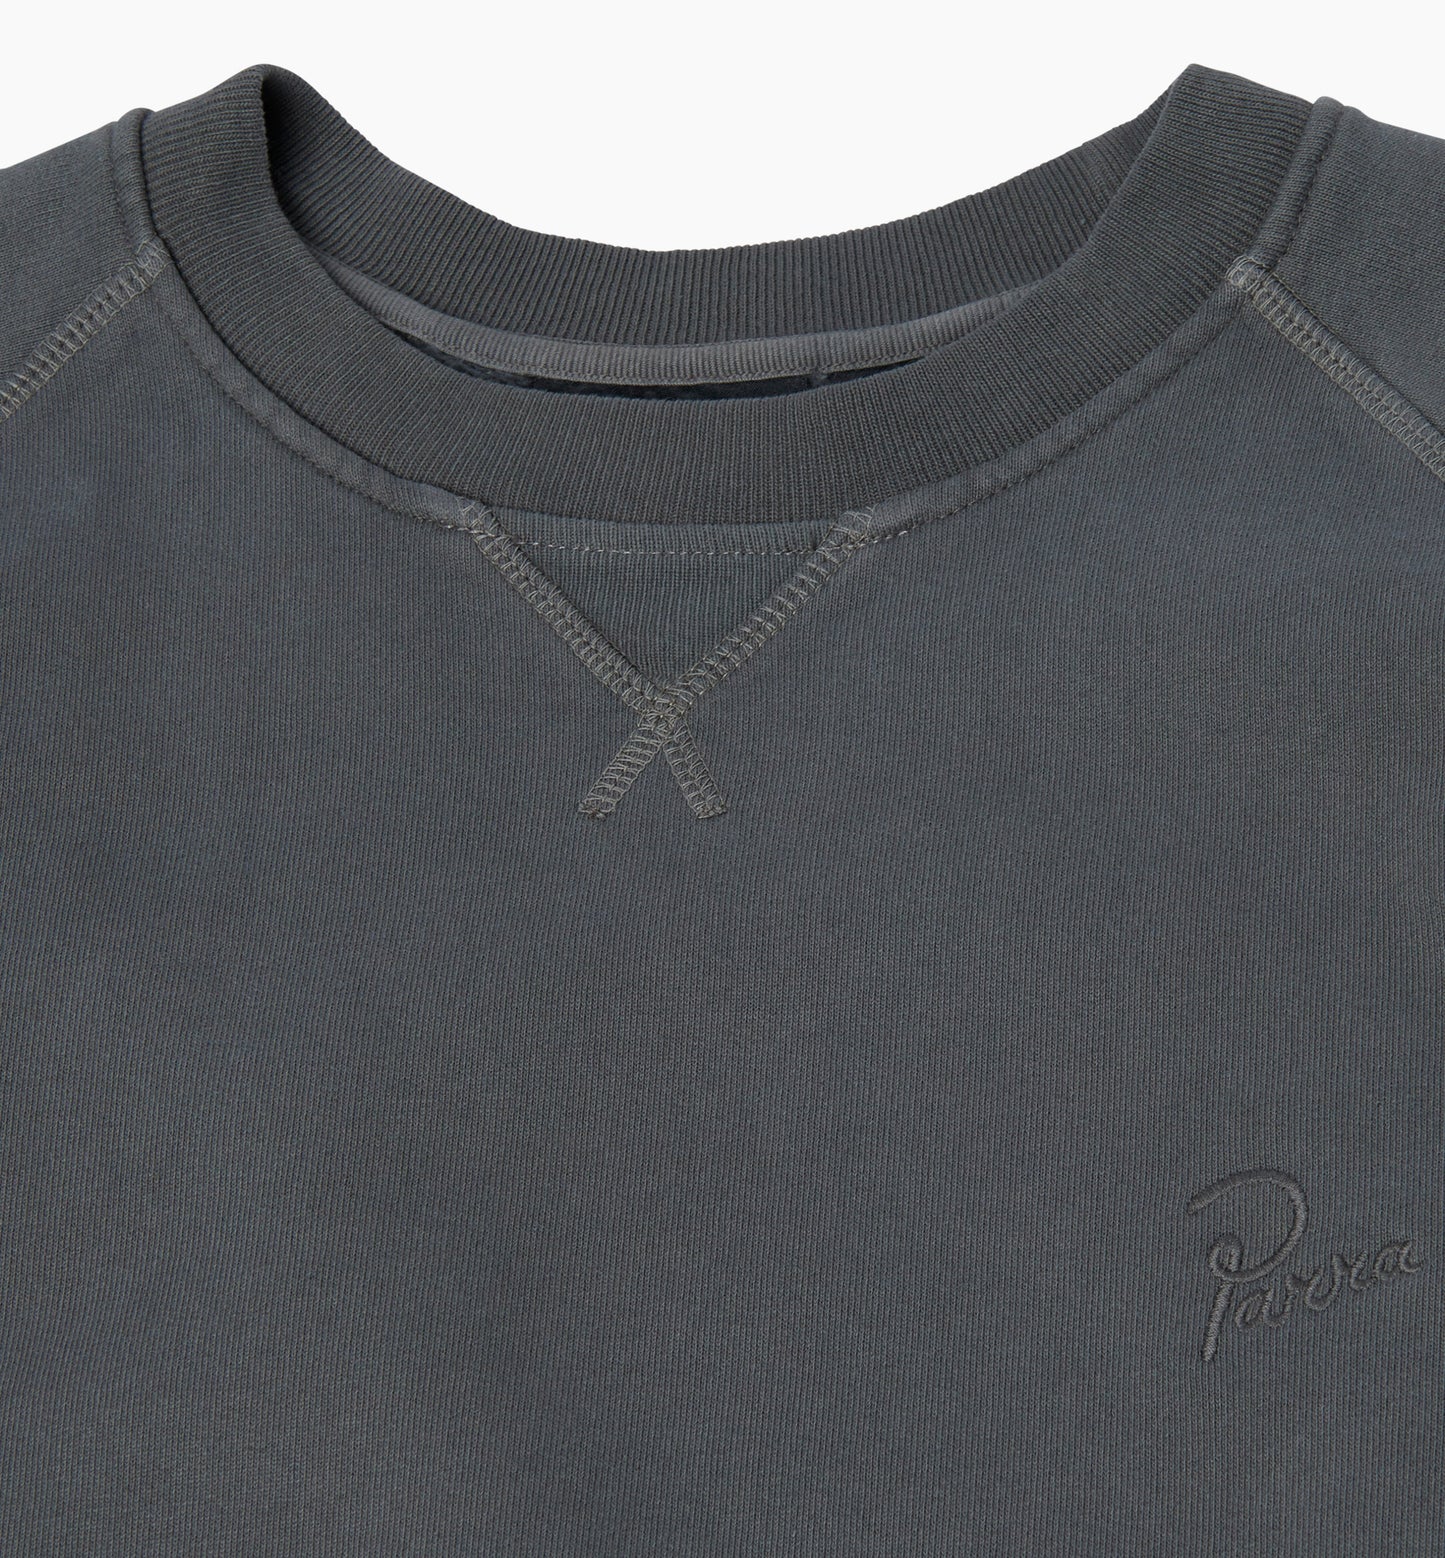 By Parra Logo Crewneck Sweater Charcoal